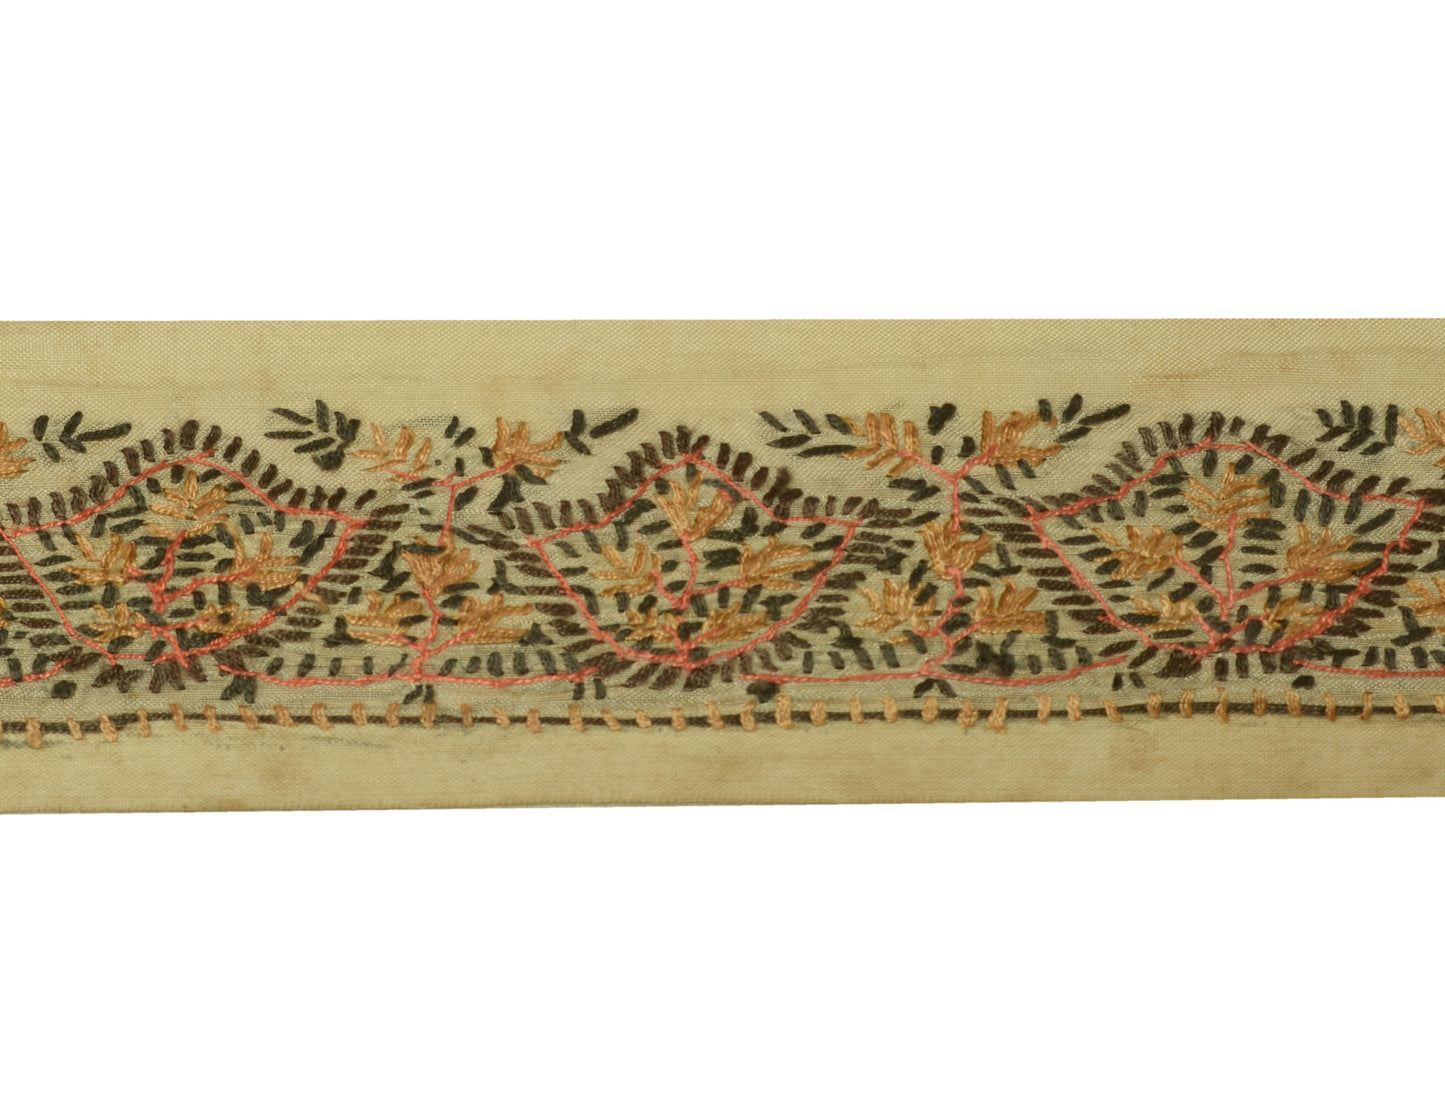 Sushila Vintage Beige Saree Border Craft Sewing Trim Hand Embroidered Lace Decor